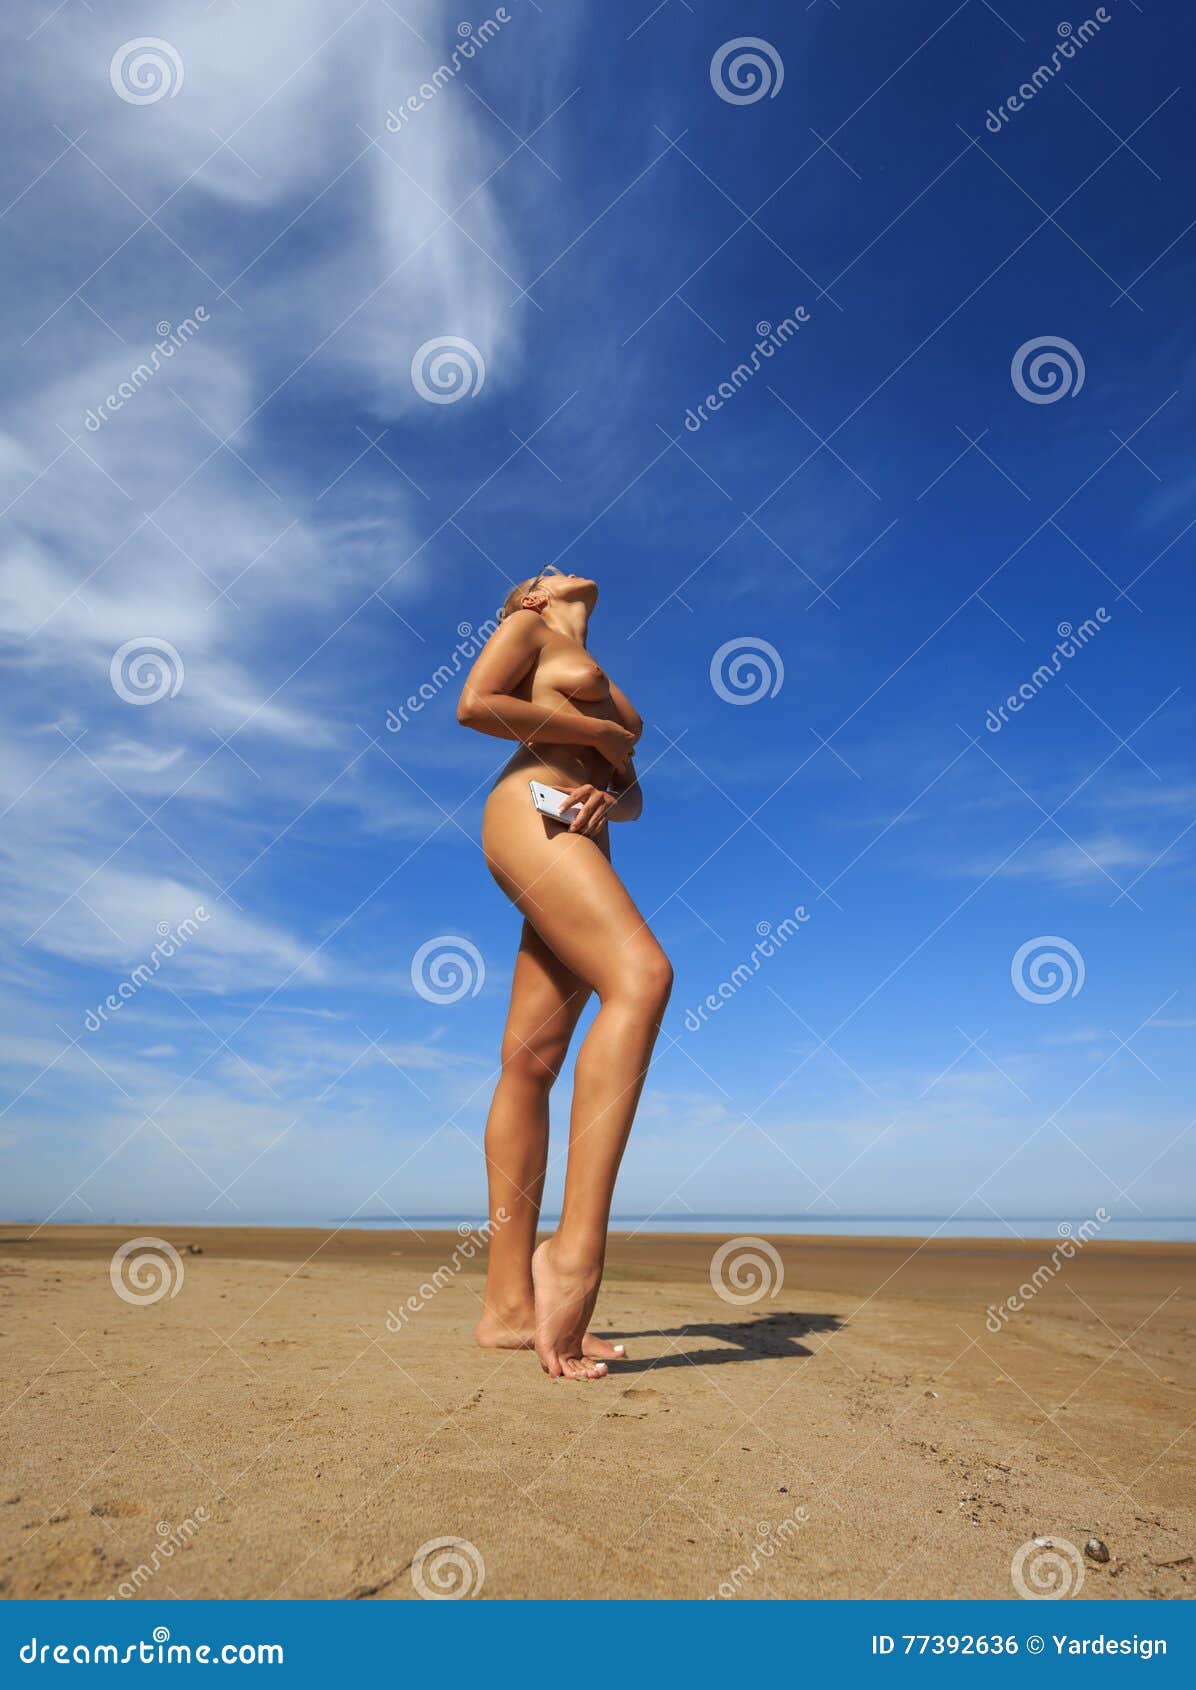 Hot nudes at beach